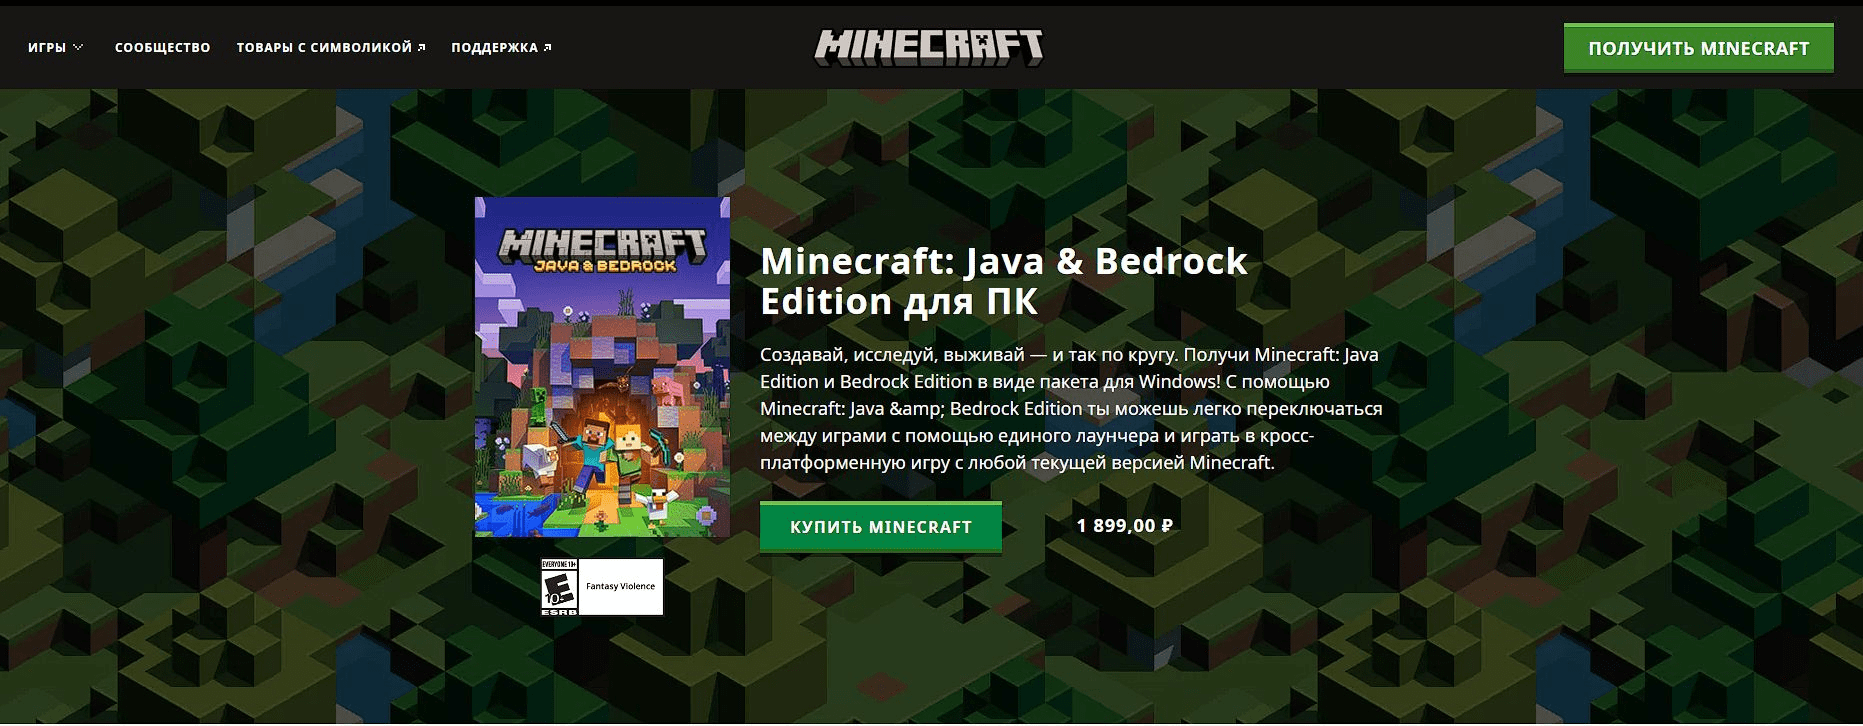 Minecraft: Java & Bedrock Windows Edition Key ️ - фото